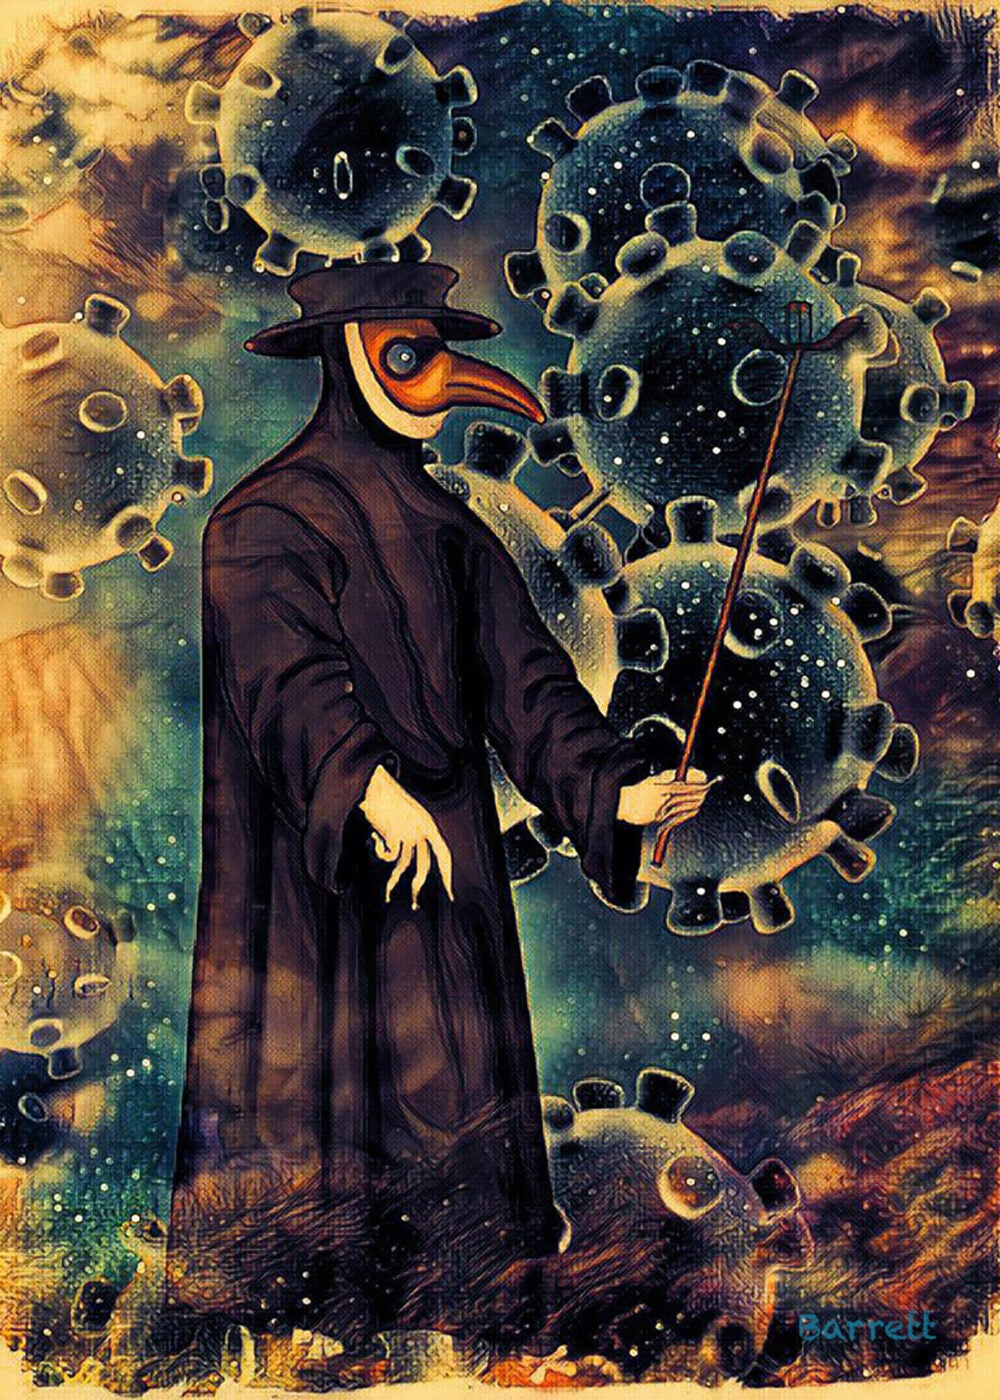 Plague doctor illustration.